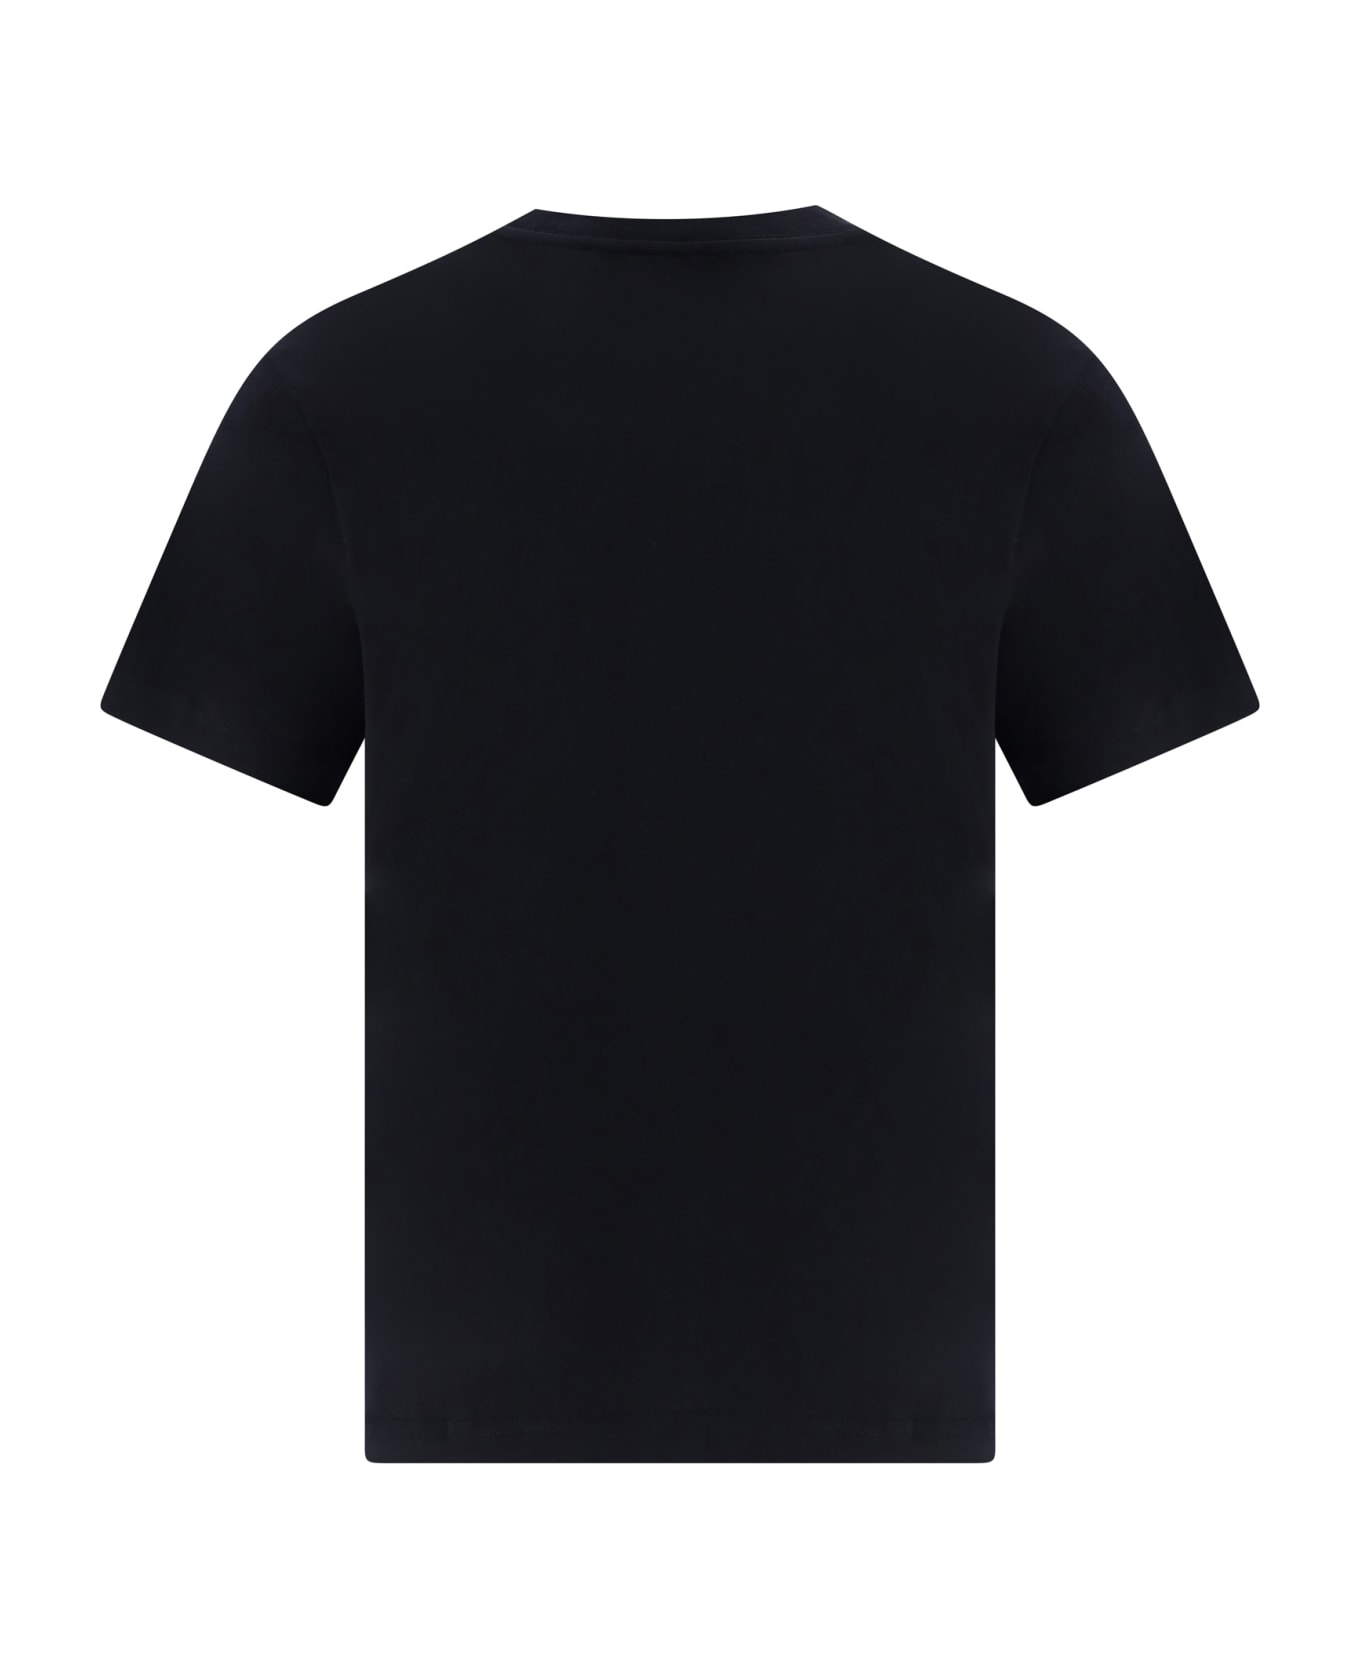 Axel Arigato T-shirt - Black